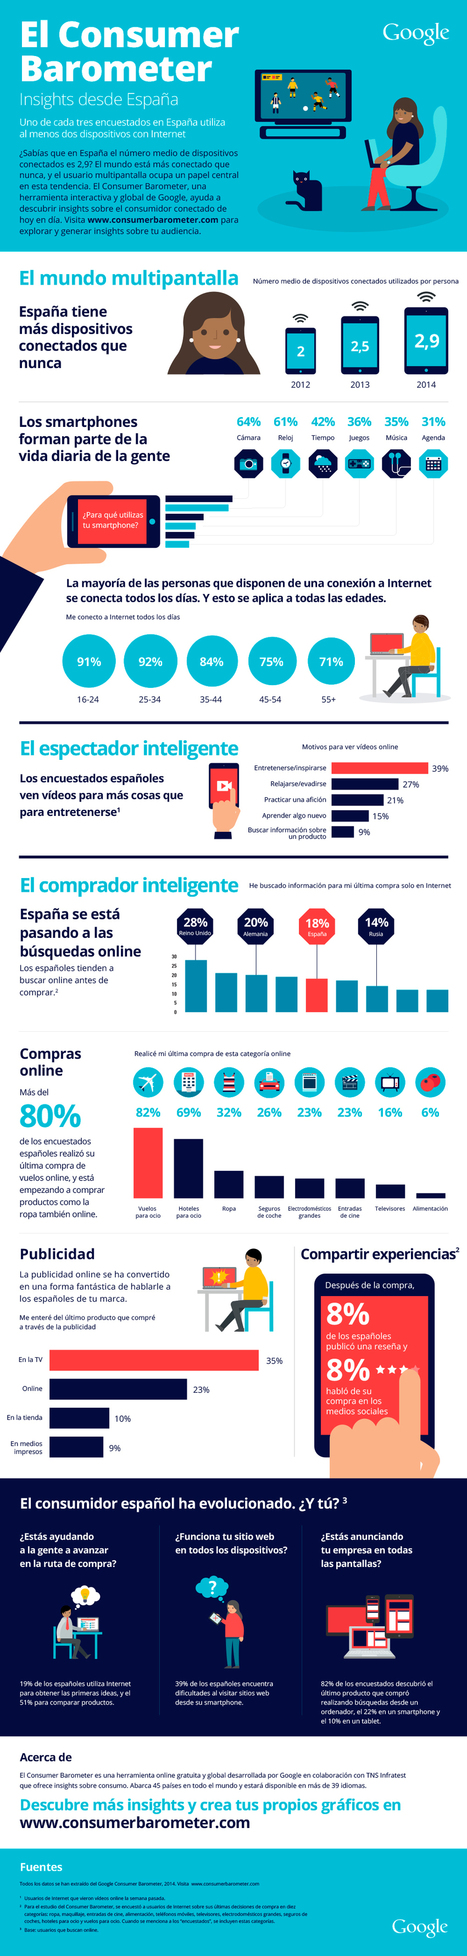 Consumer Barometer Insights de España #infografia #infographic #marketing | Seo, Social Media Marketing | Scoop.it